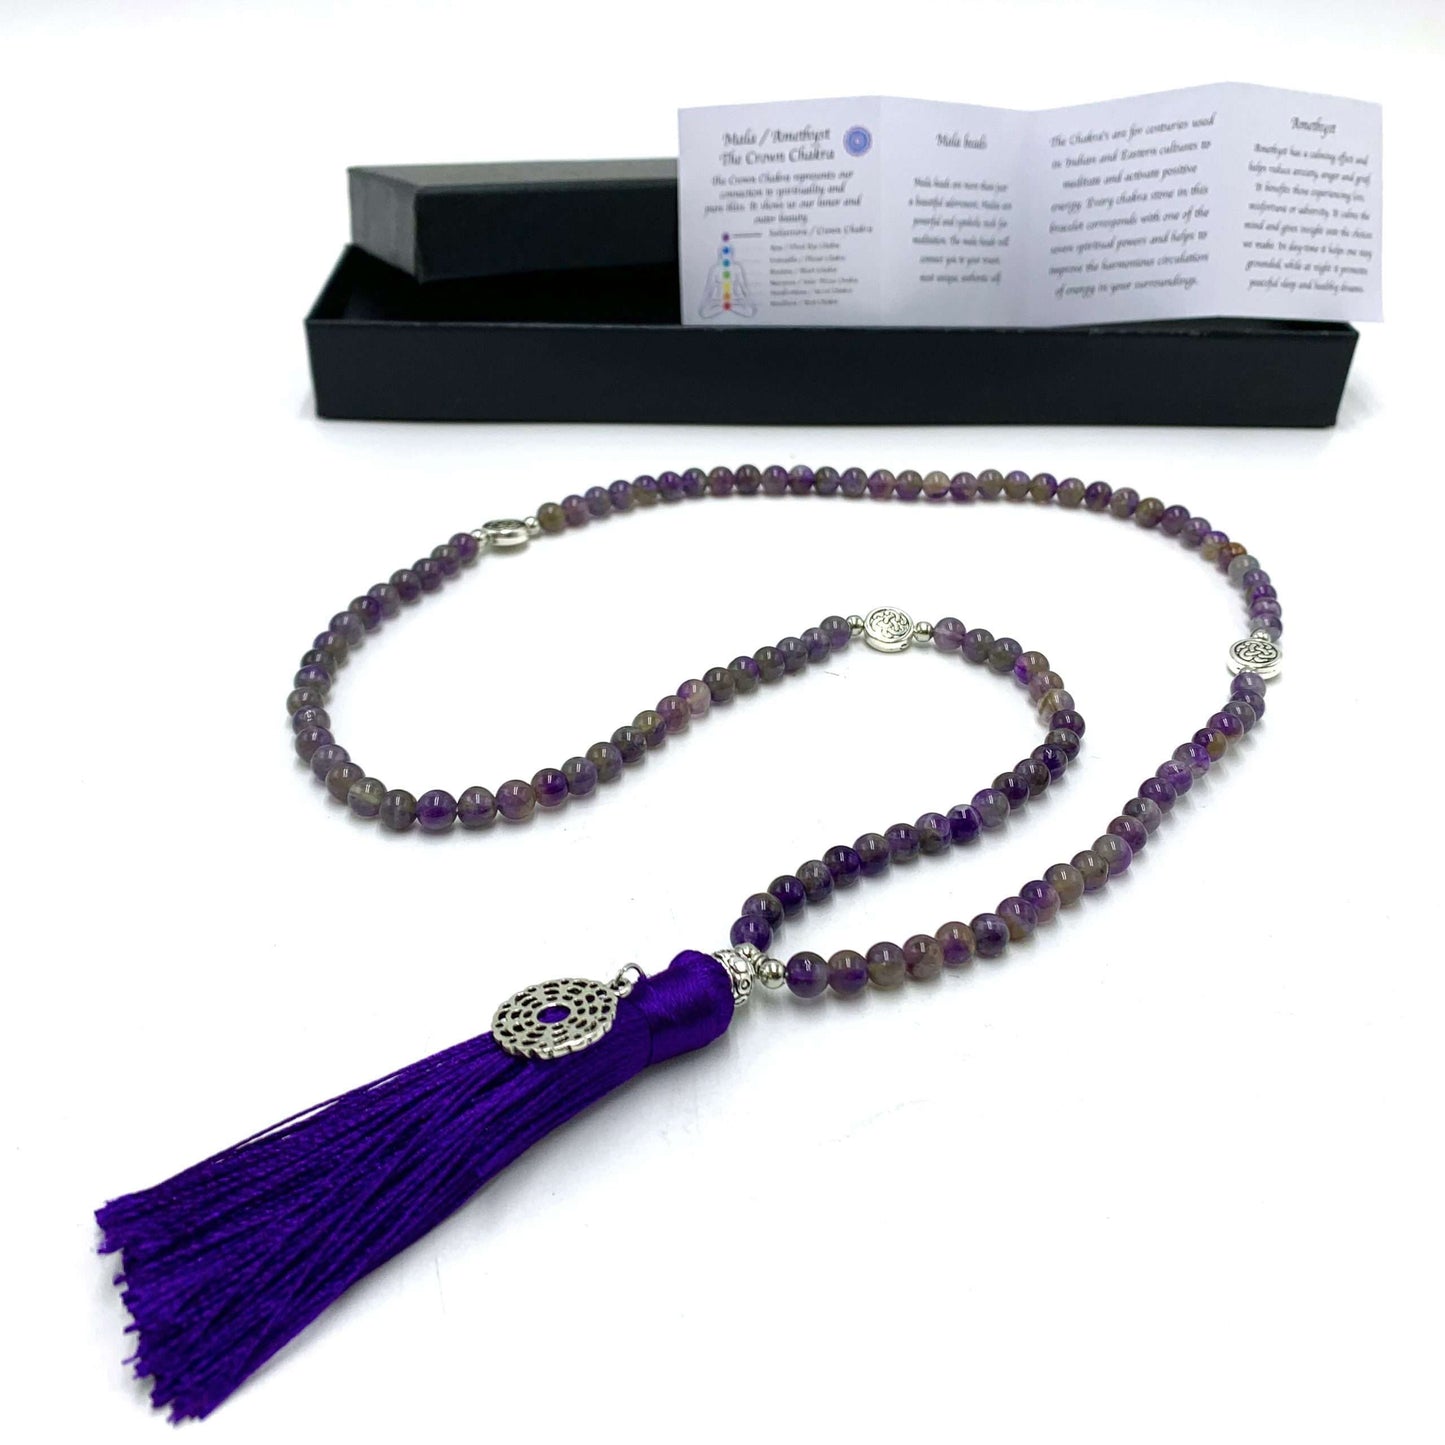 Amethyst Mala beads with Chakra Charm- 108 Beads - Rivendell Shop